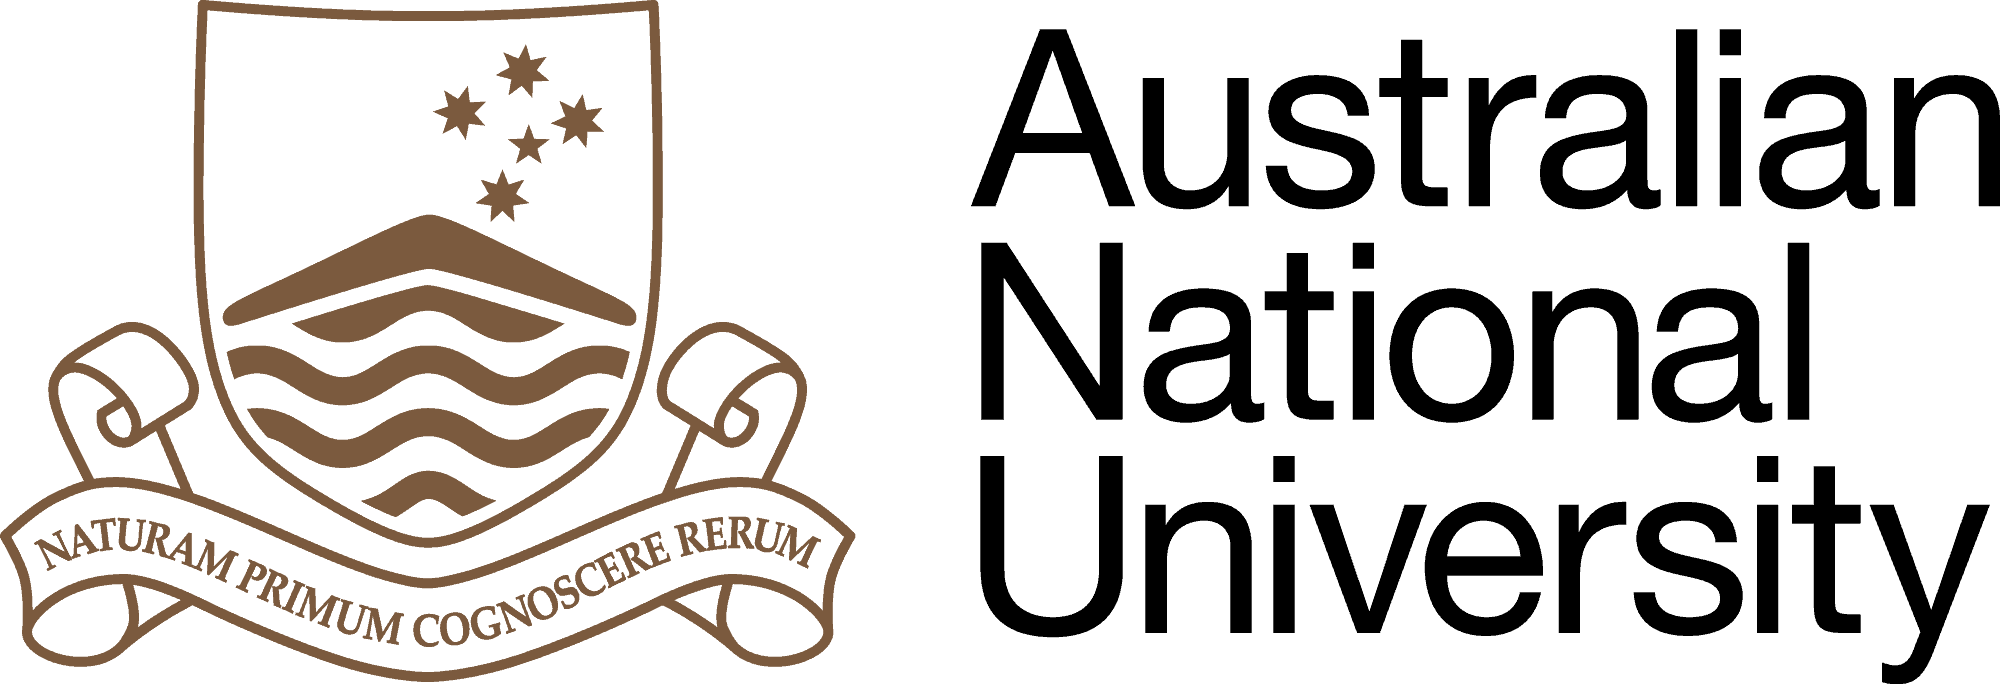 Australian-National-University-Logo-1.png